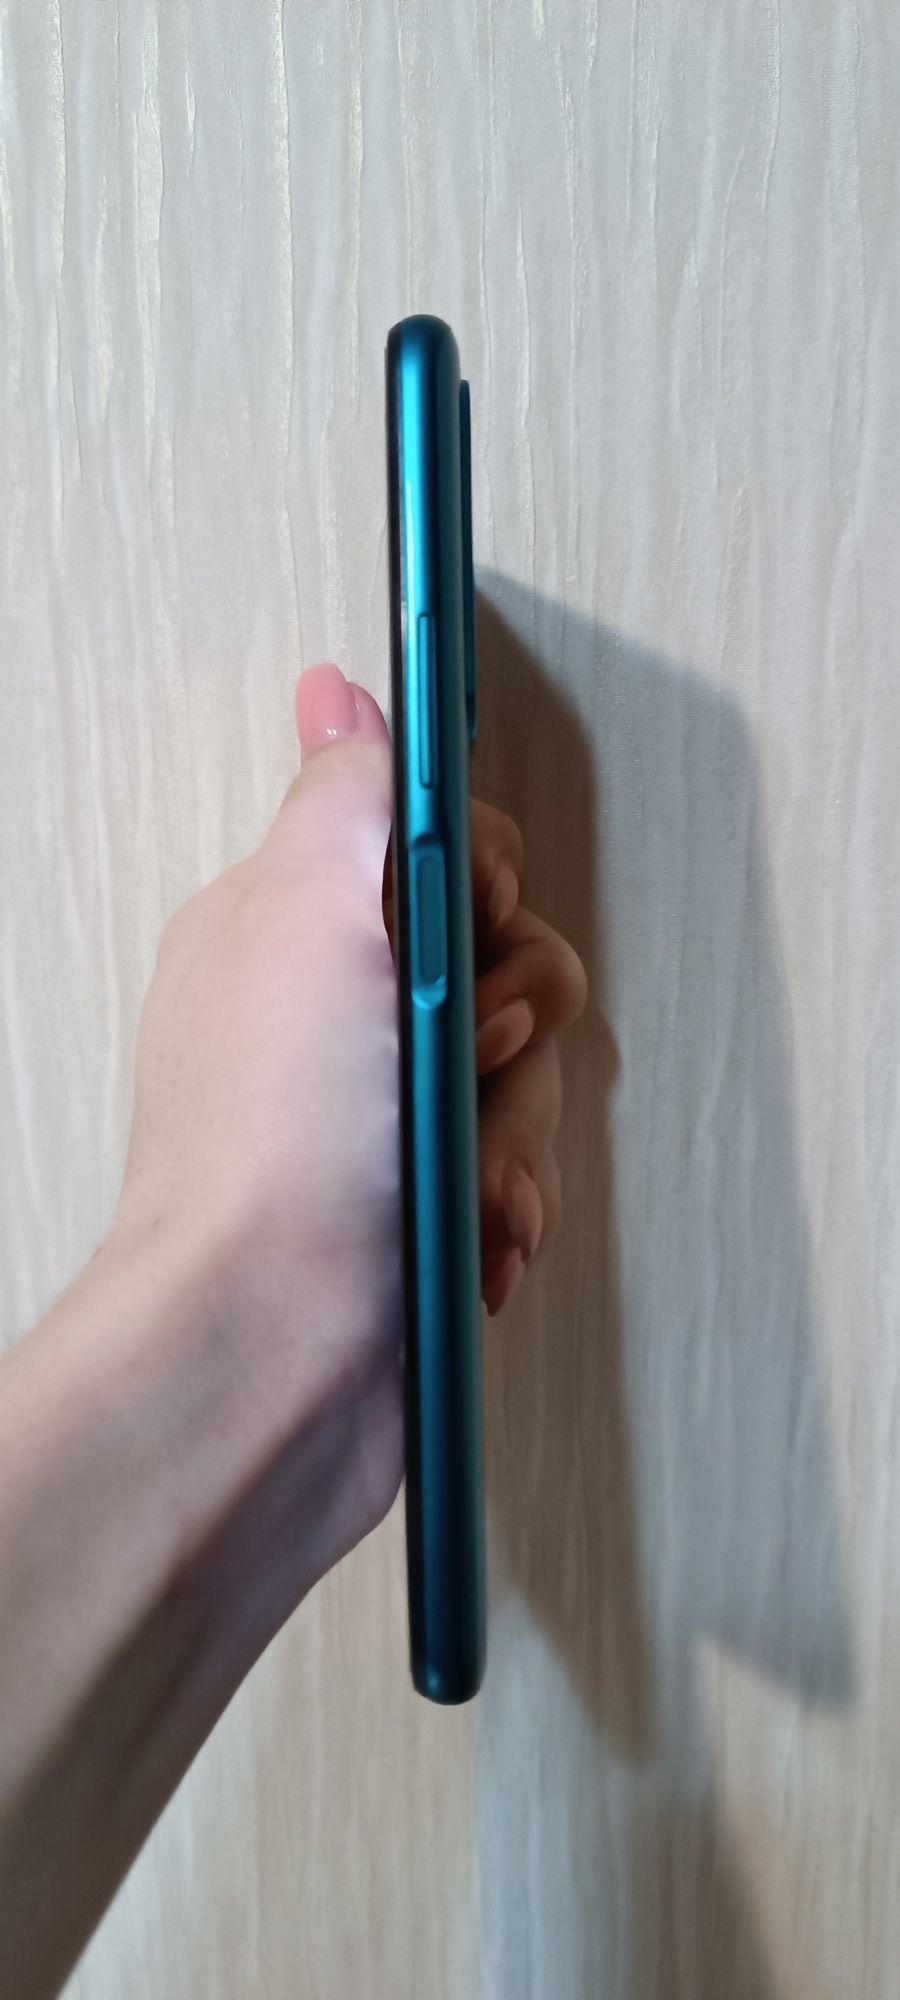 Huawei P smart 2021, Samsung Galaxy A51